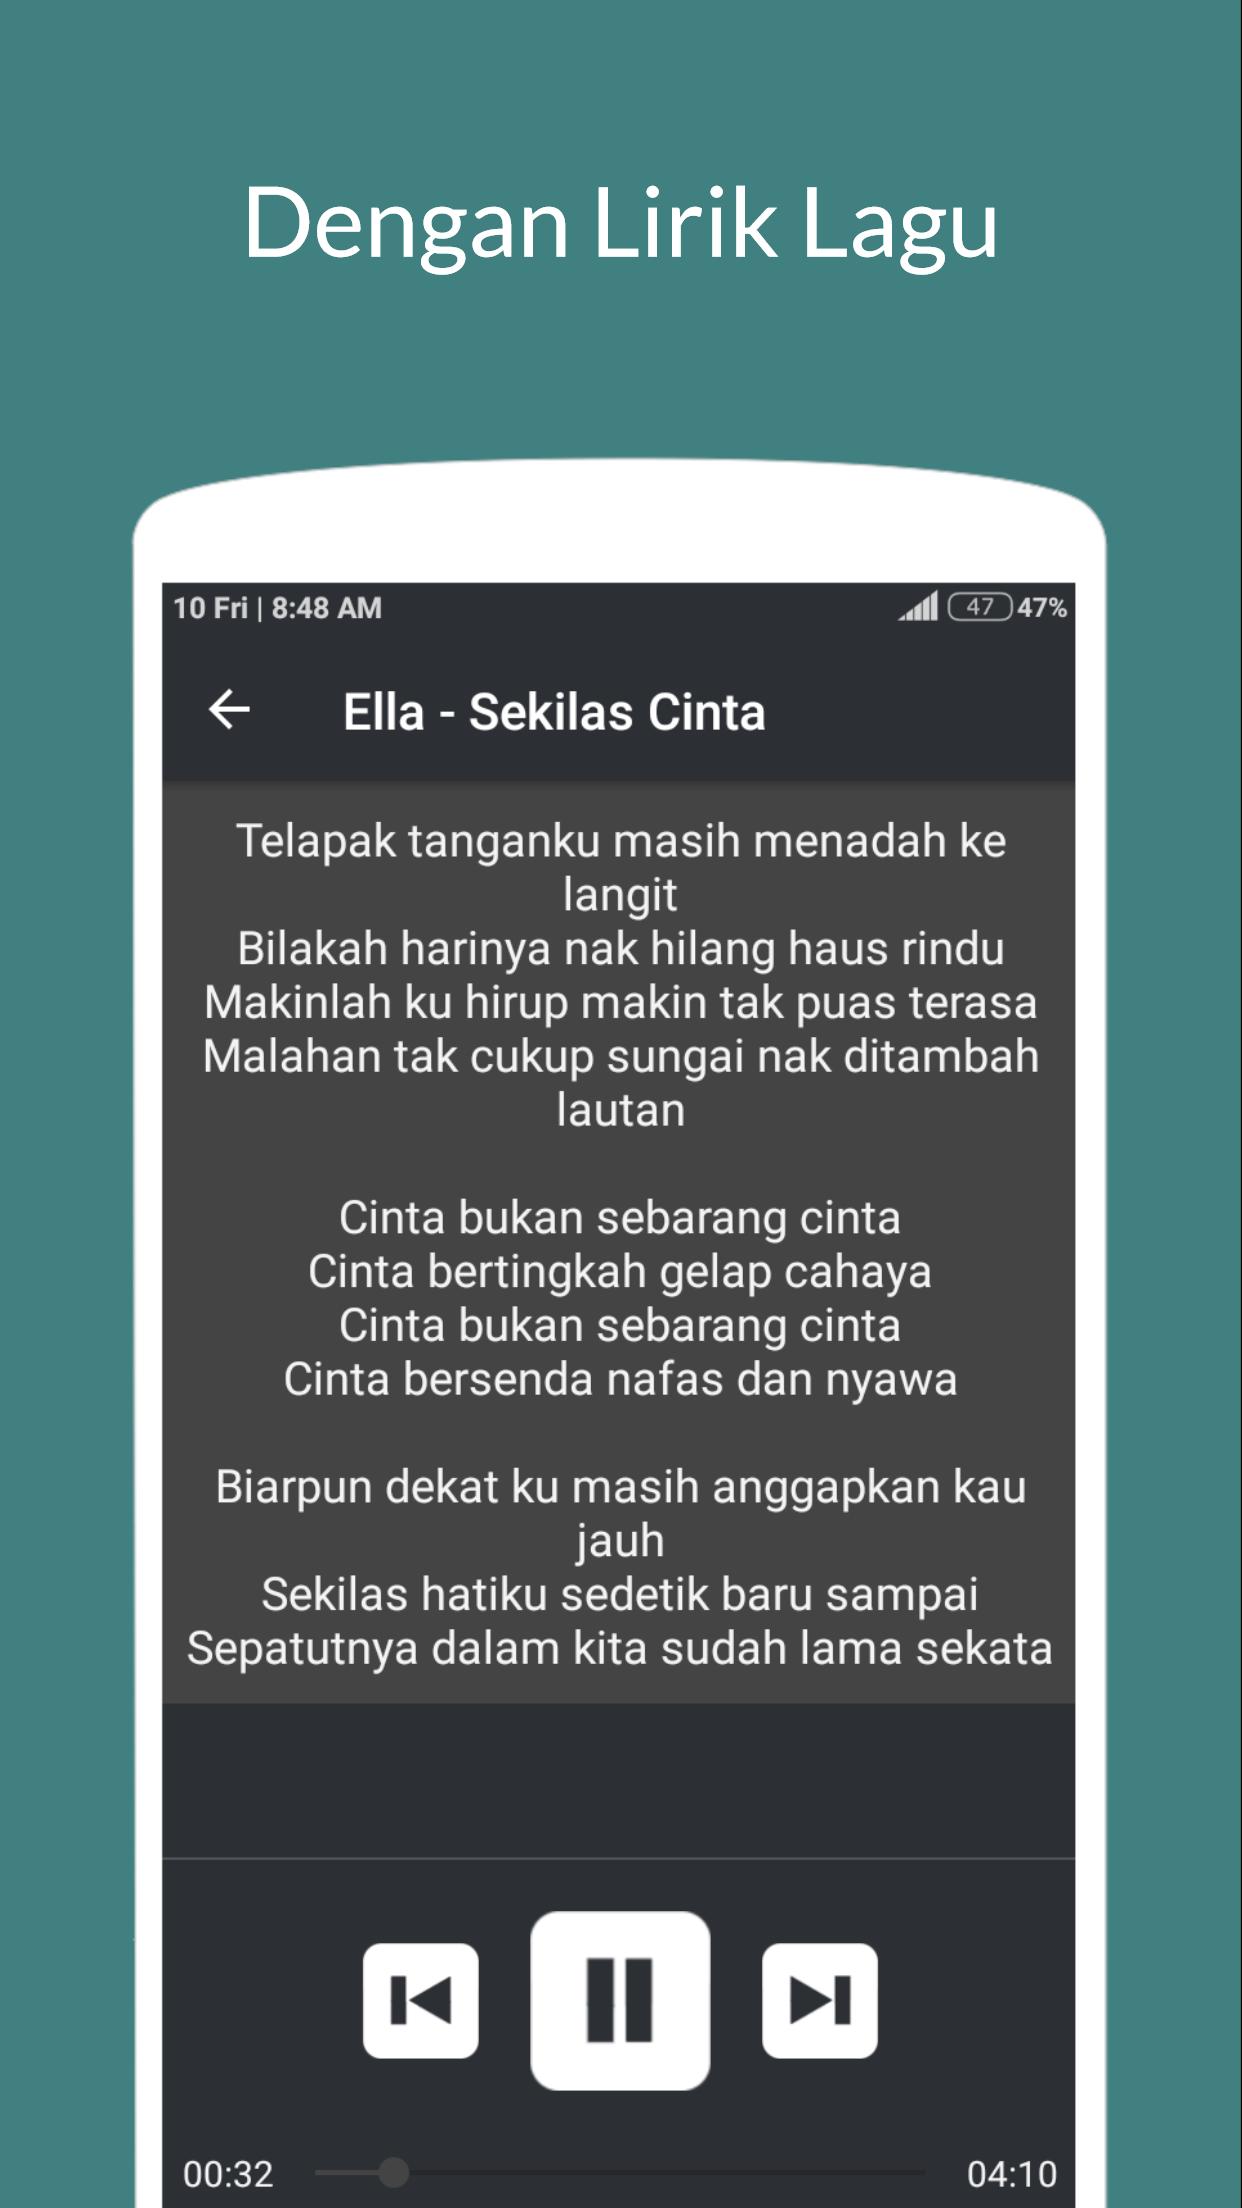 Lagu Malaysia Iirik Offline For Android Apk Download - roblox hatiku live